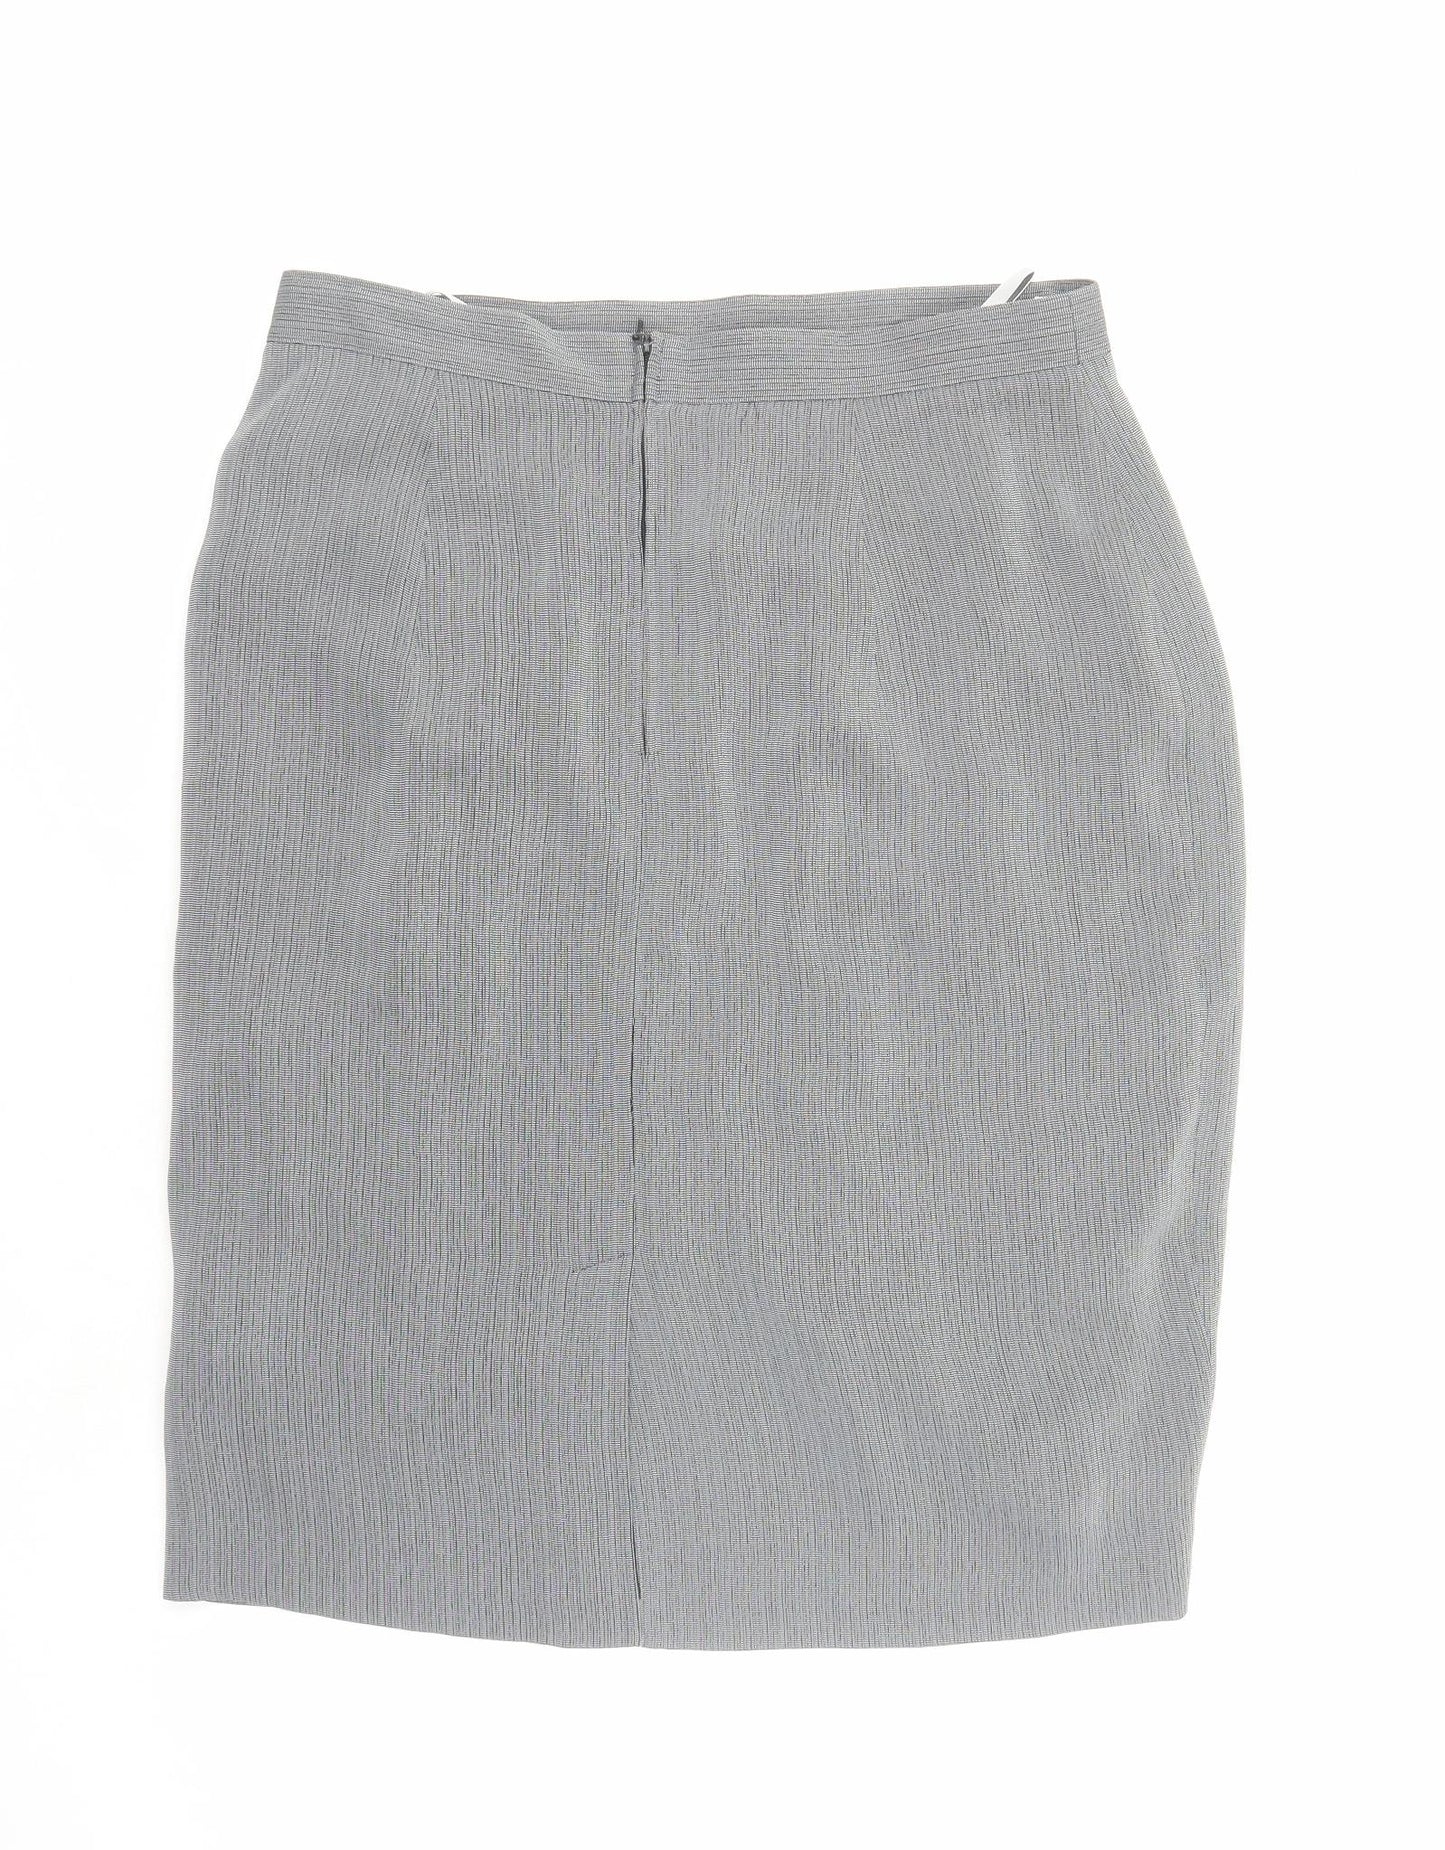 Gerry Weber Womens Grey Geometric Polyester A-Line Skirt Size 18 Zip